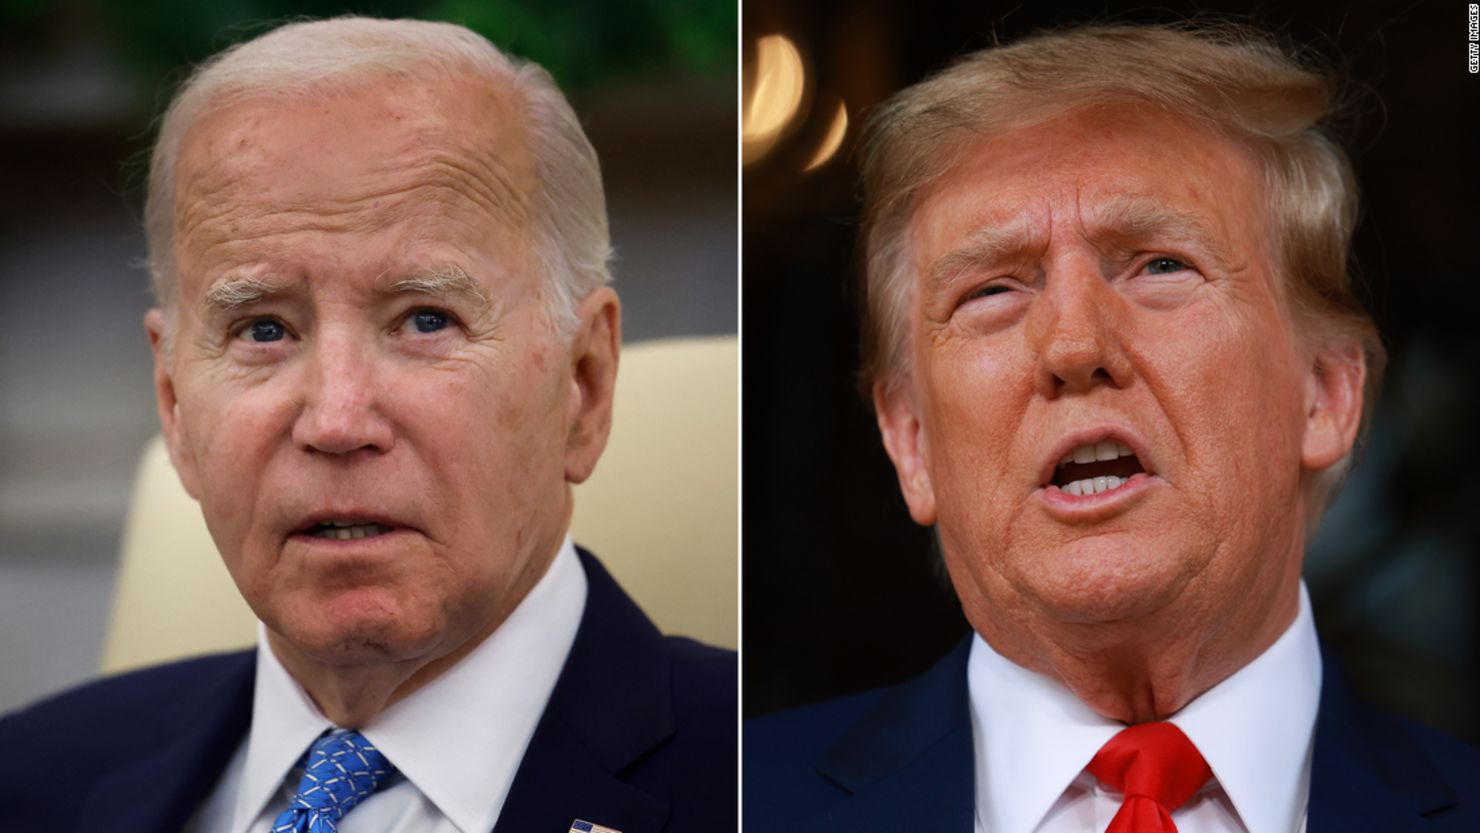 Biden, Trump agree to Presidential debates on June 27 and Sept 10